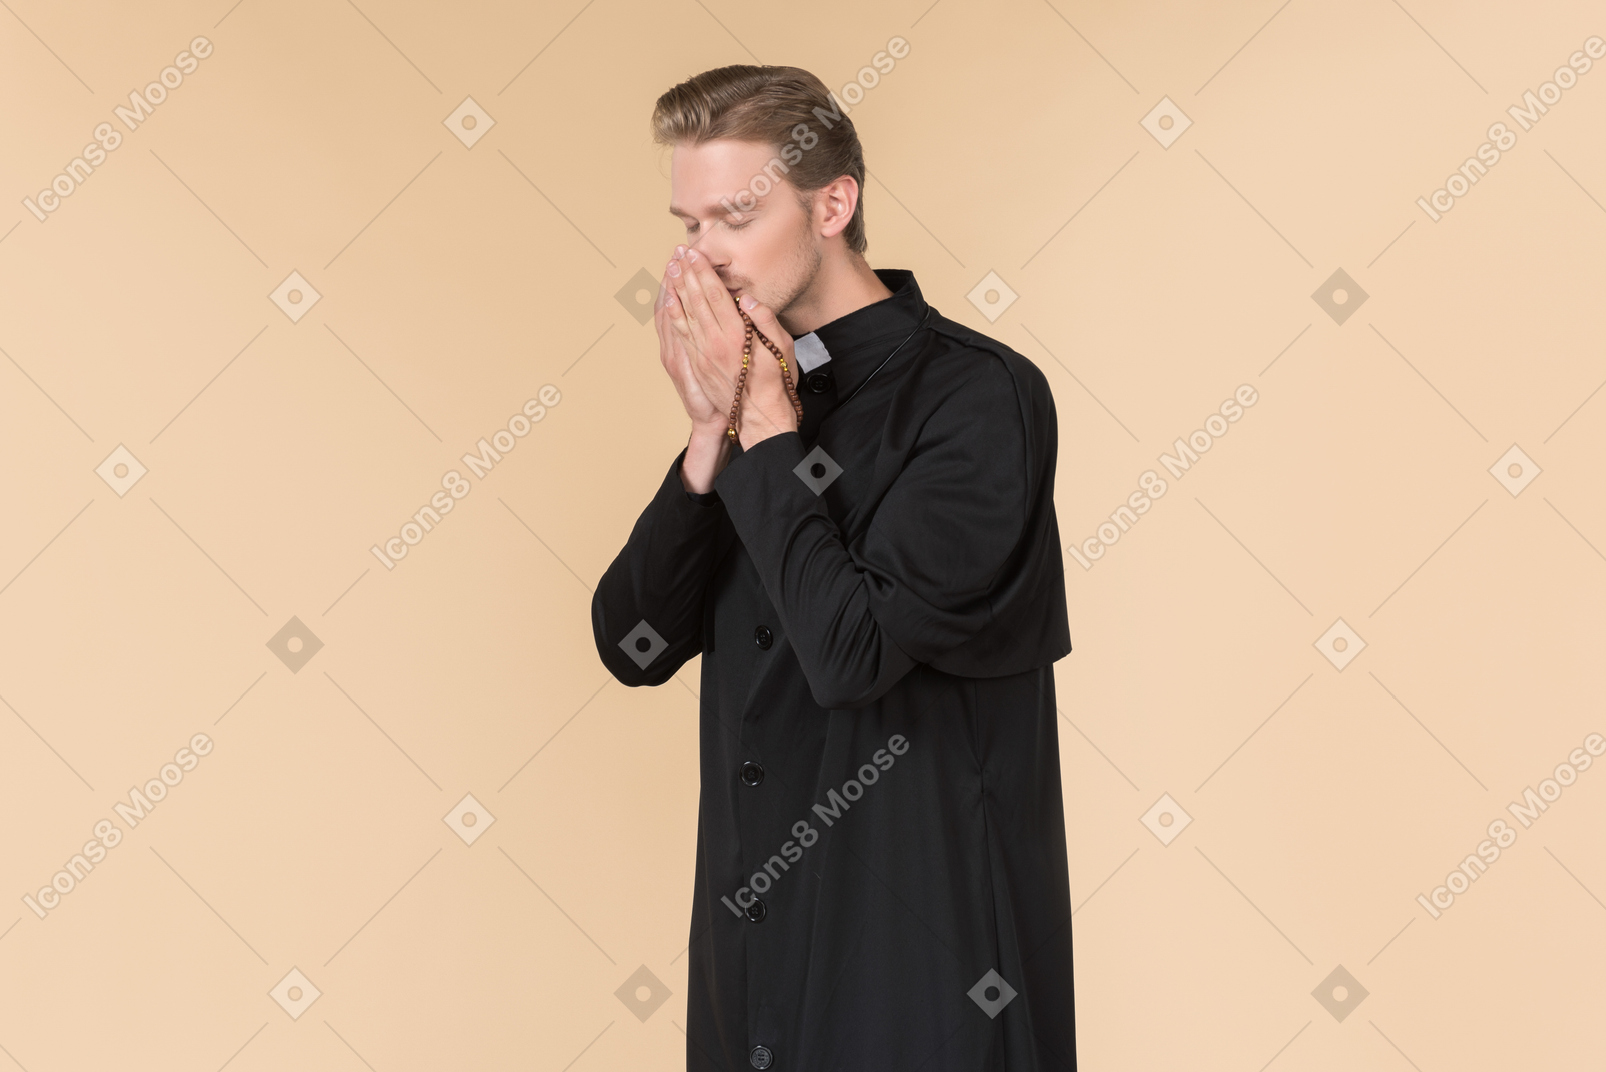 Catholic priest praying with eyes closed using prayer beads